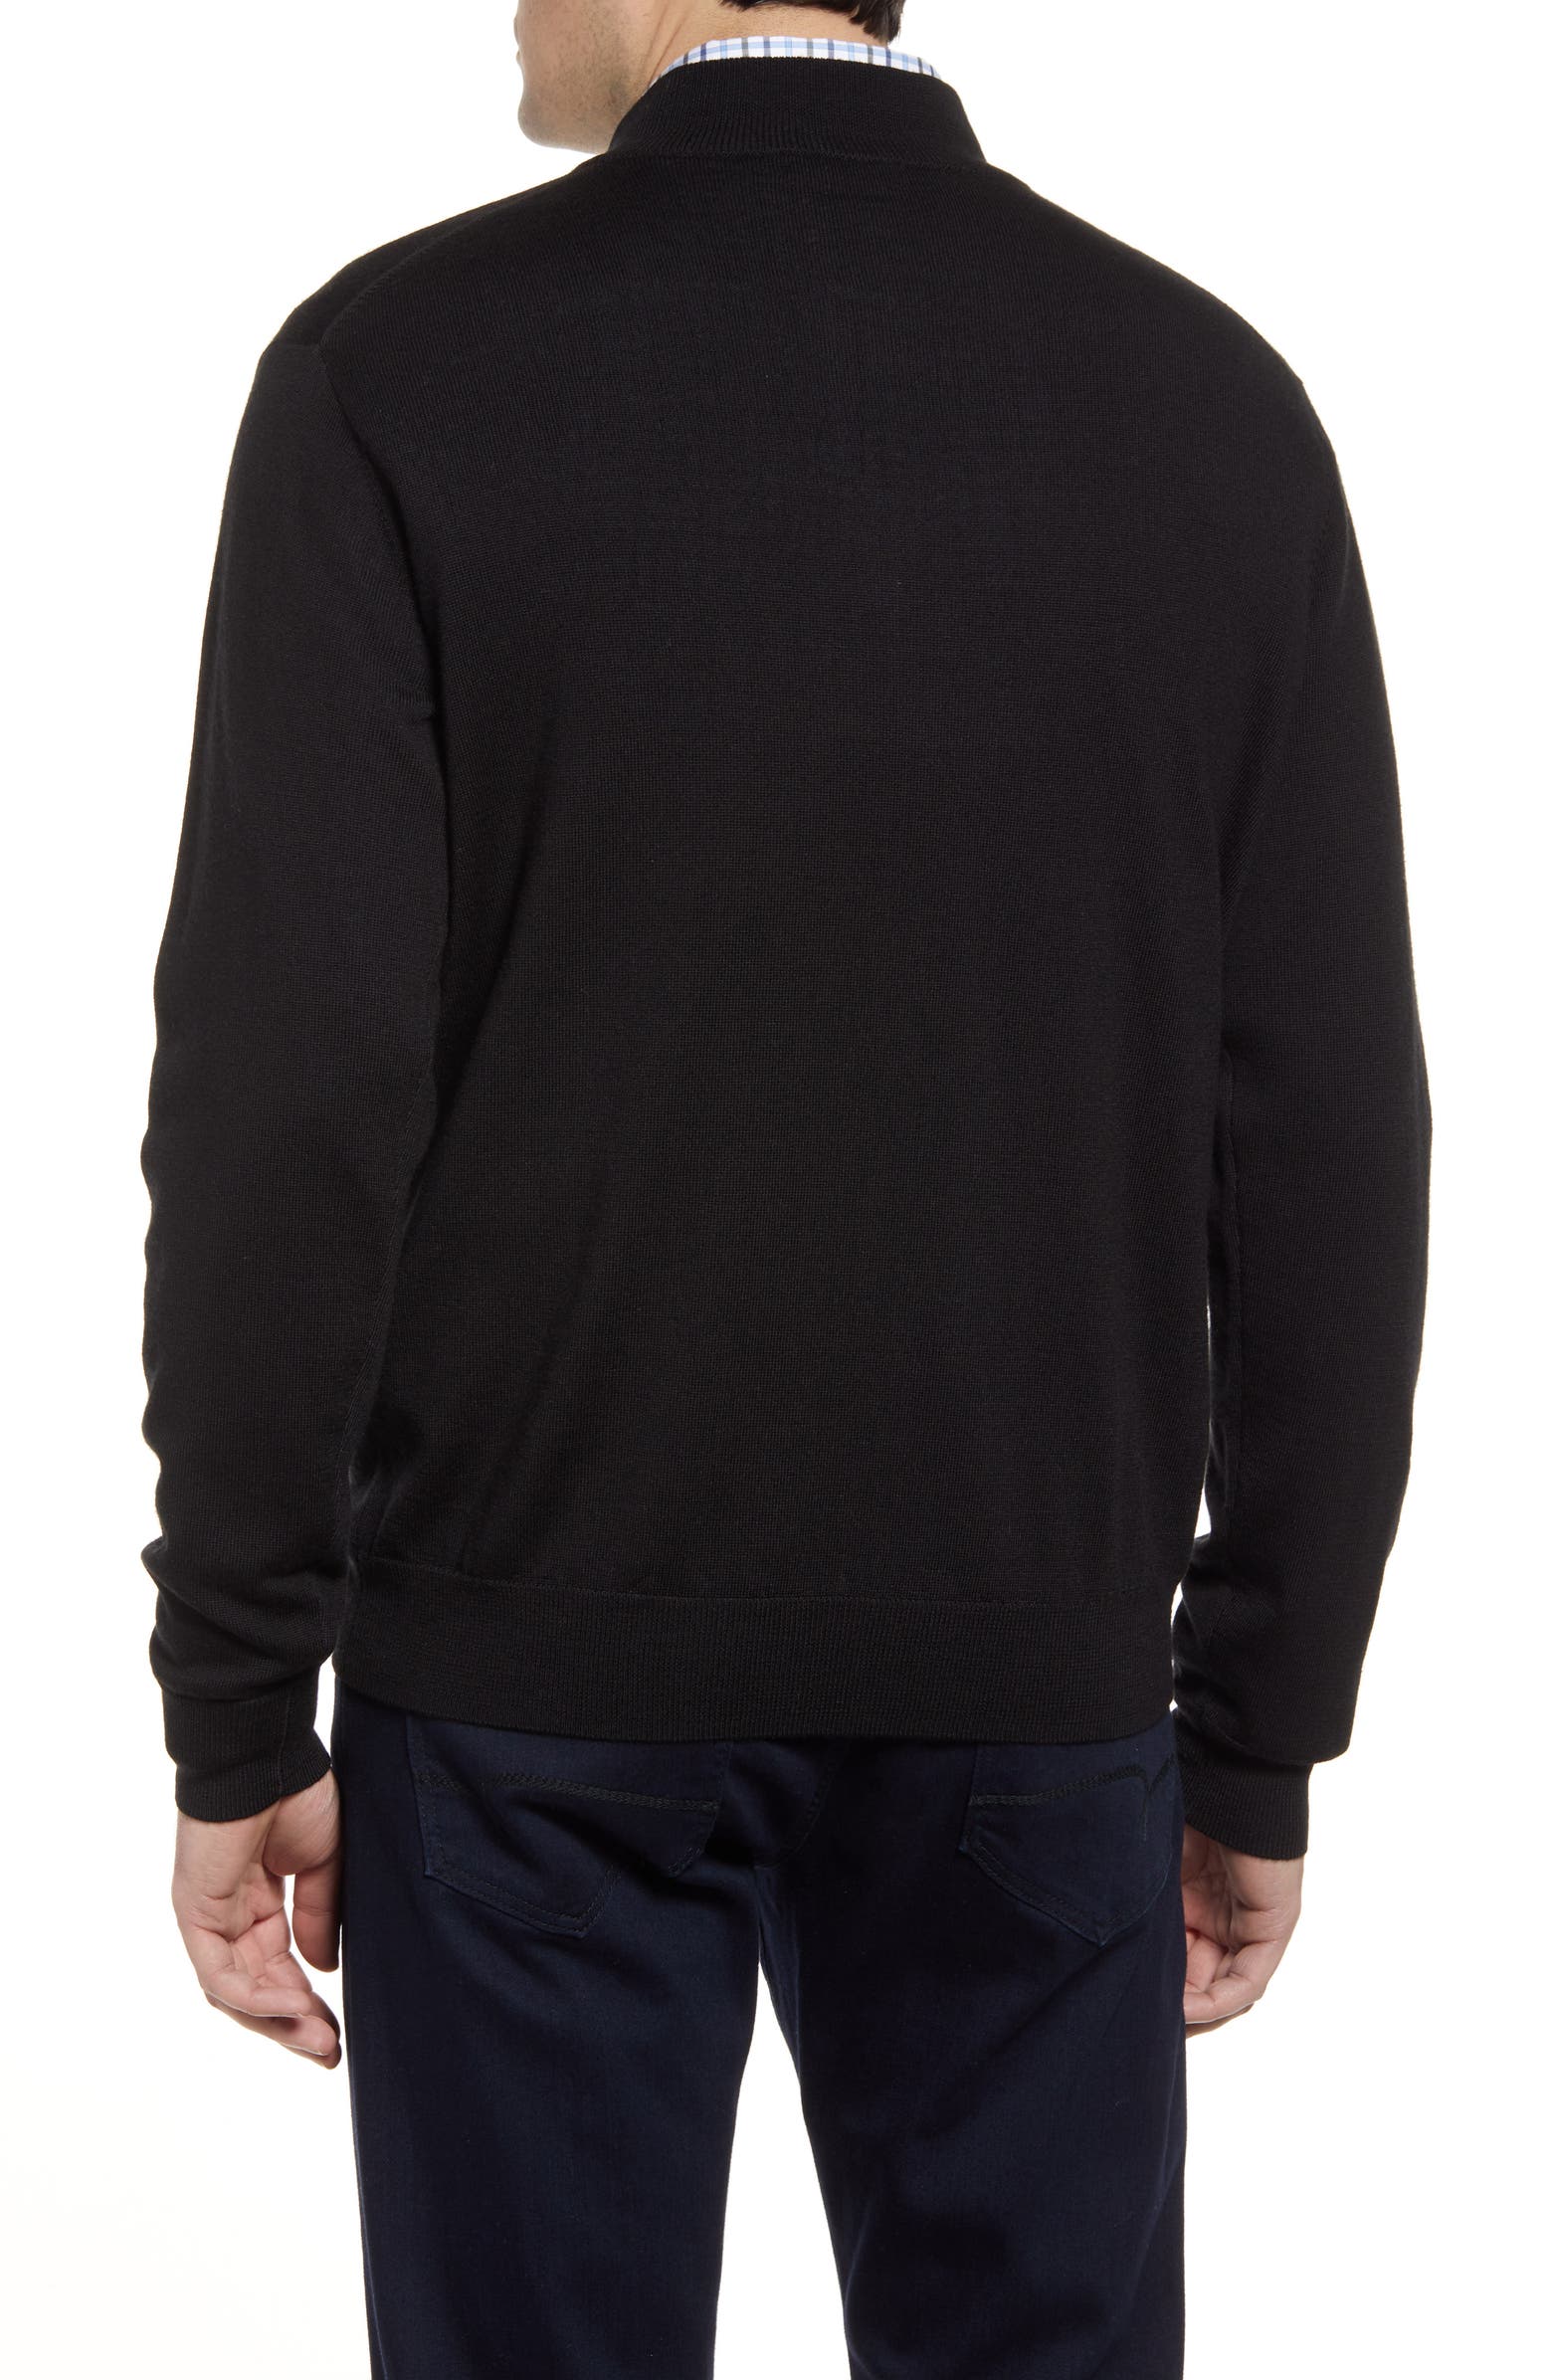 Peter Millar Autumn Crest Quarter Zip Wool & Lyocell Sweater | Nordstrom